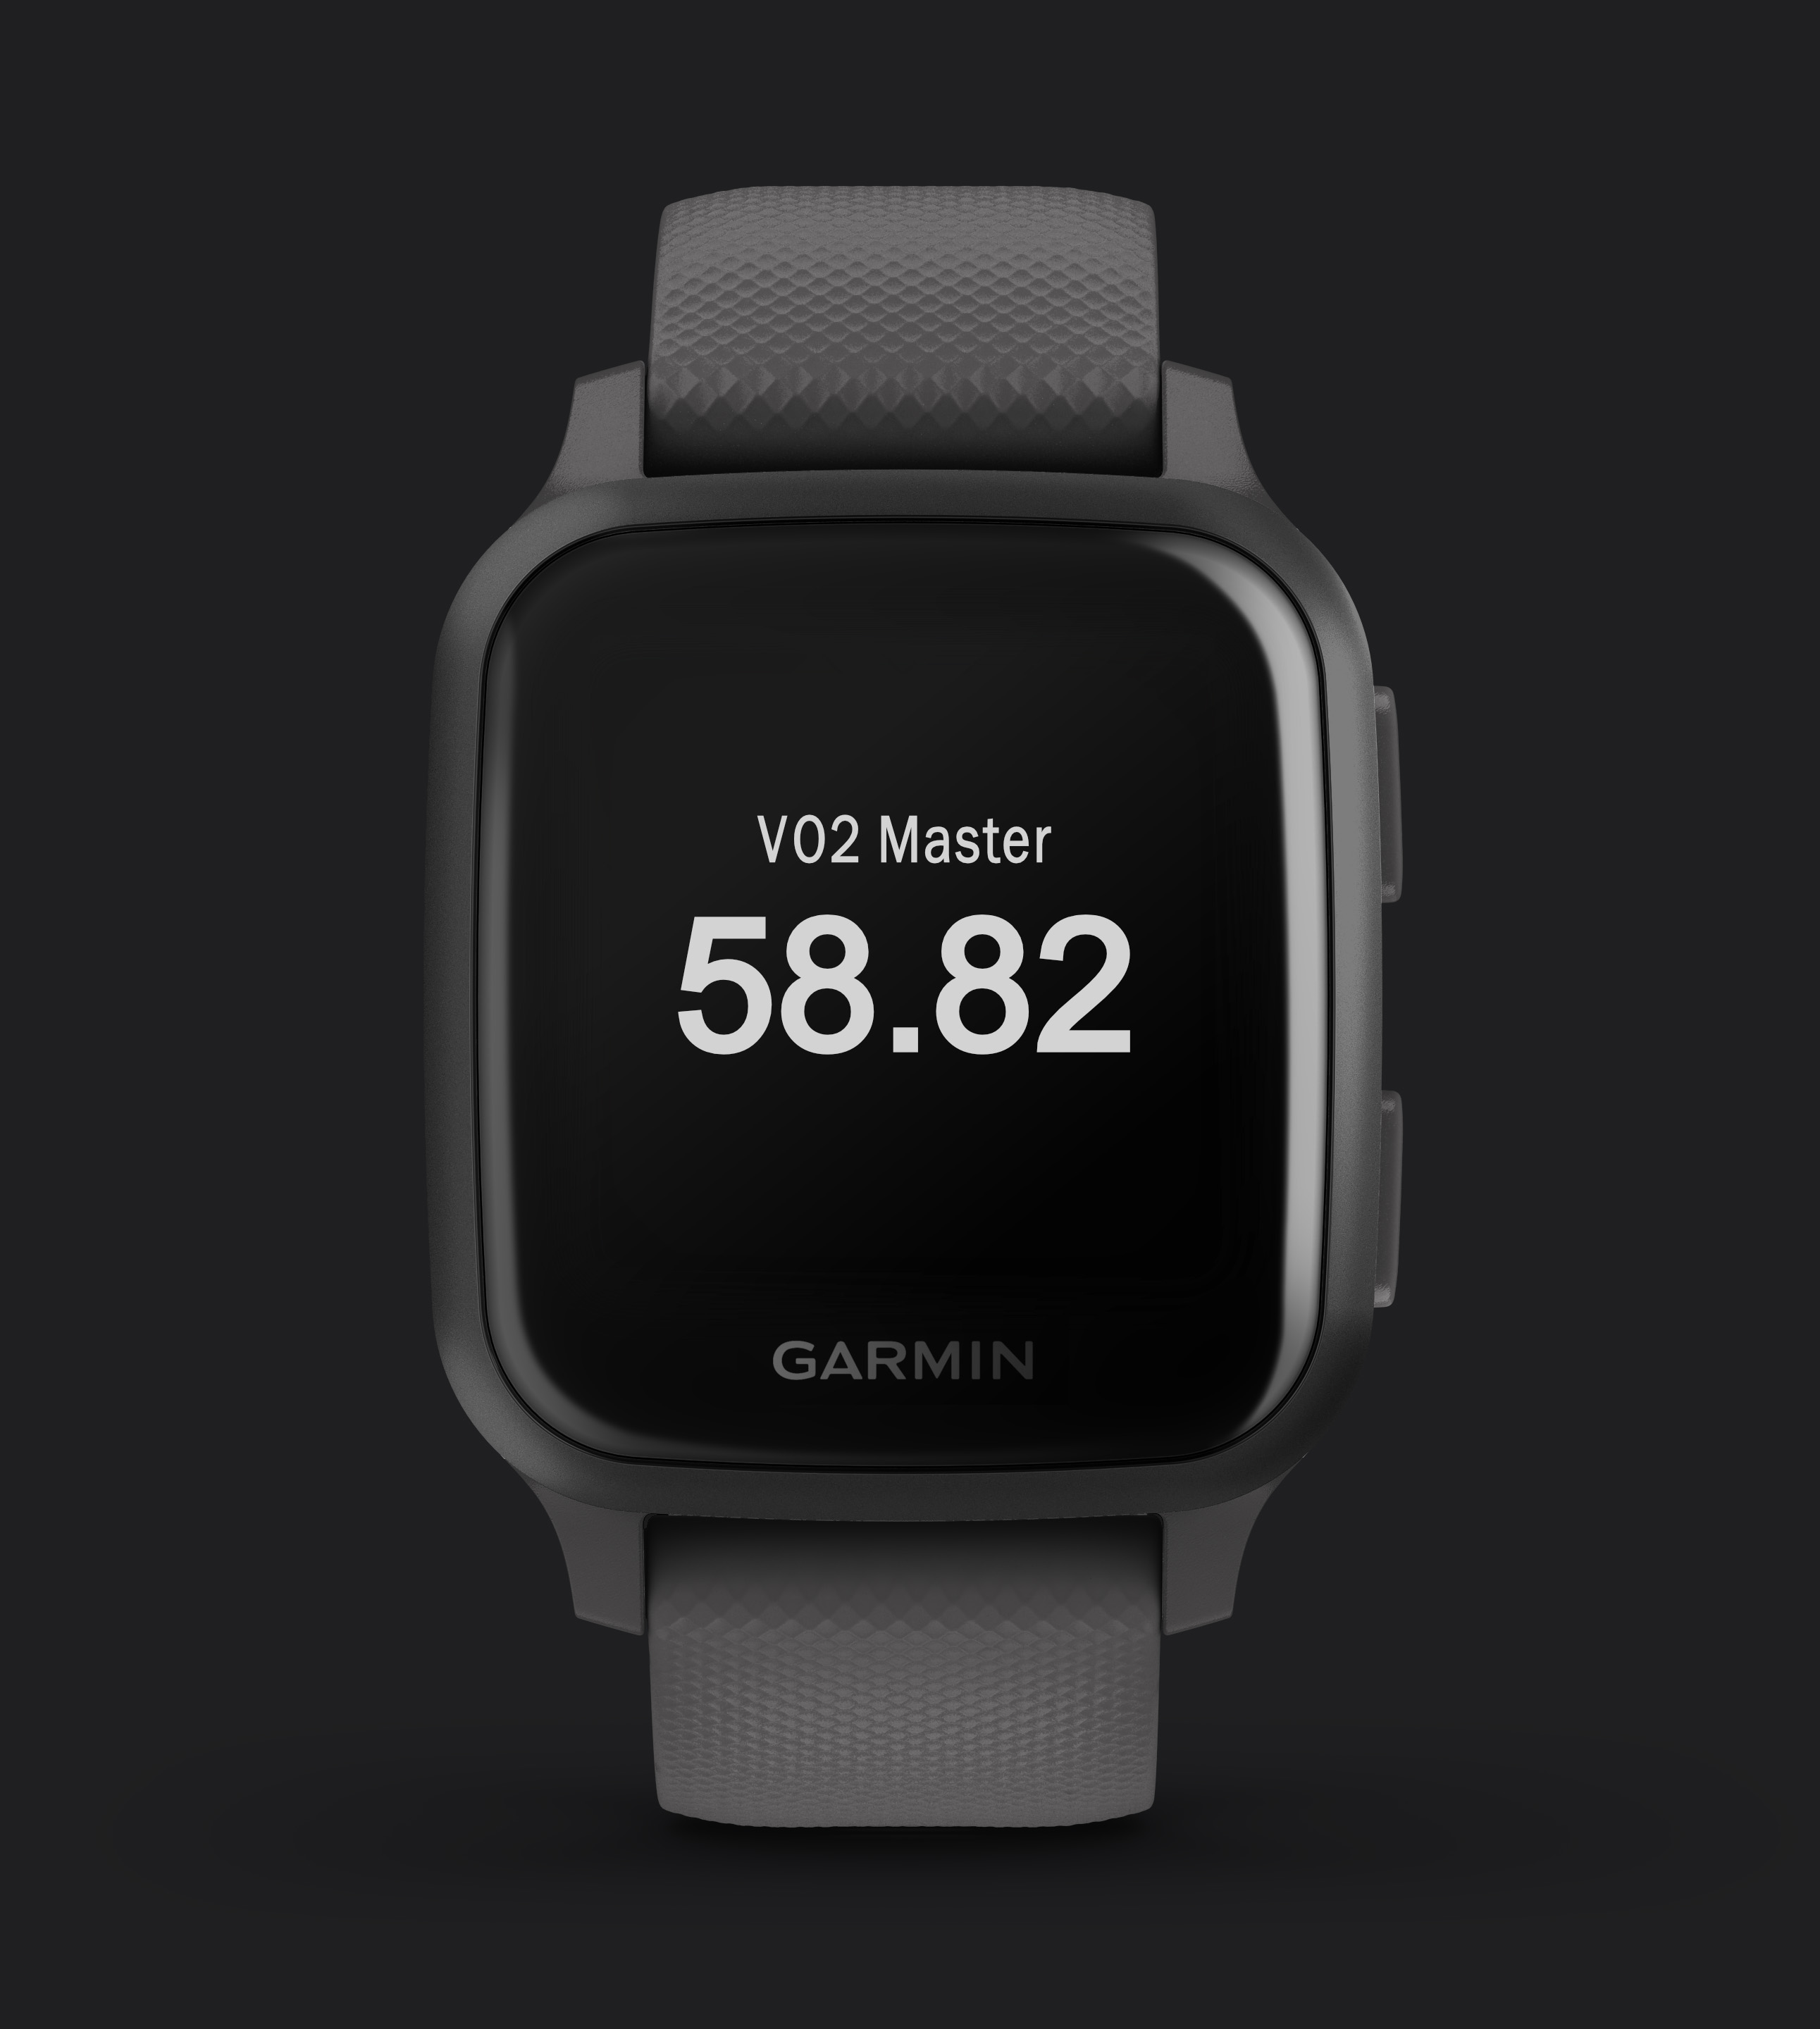 VO2 Master Garmin watch app screenshot